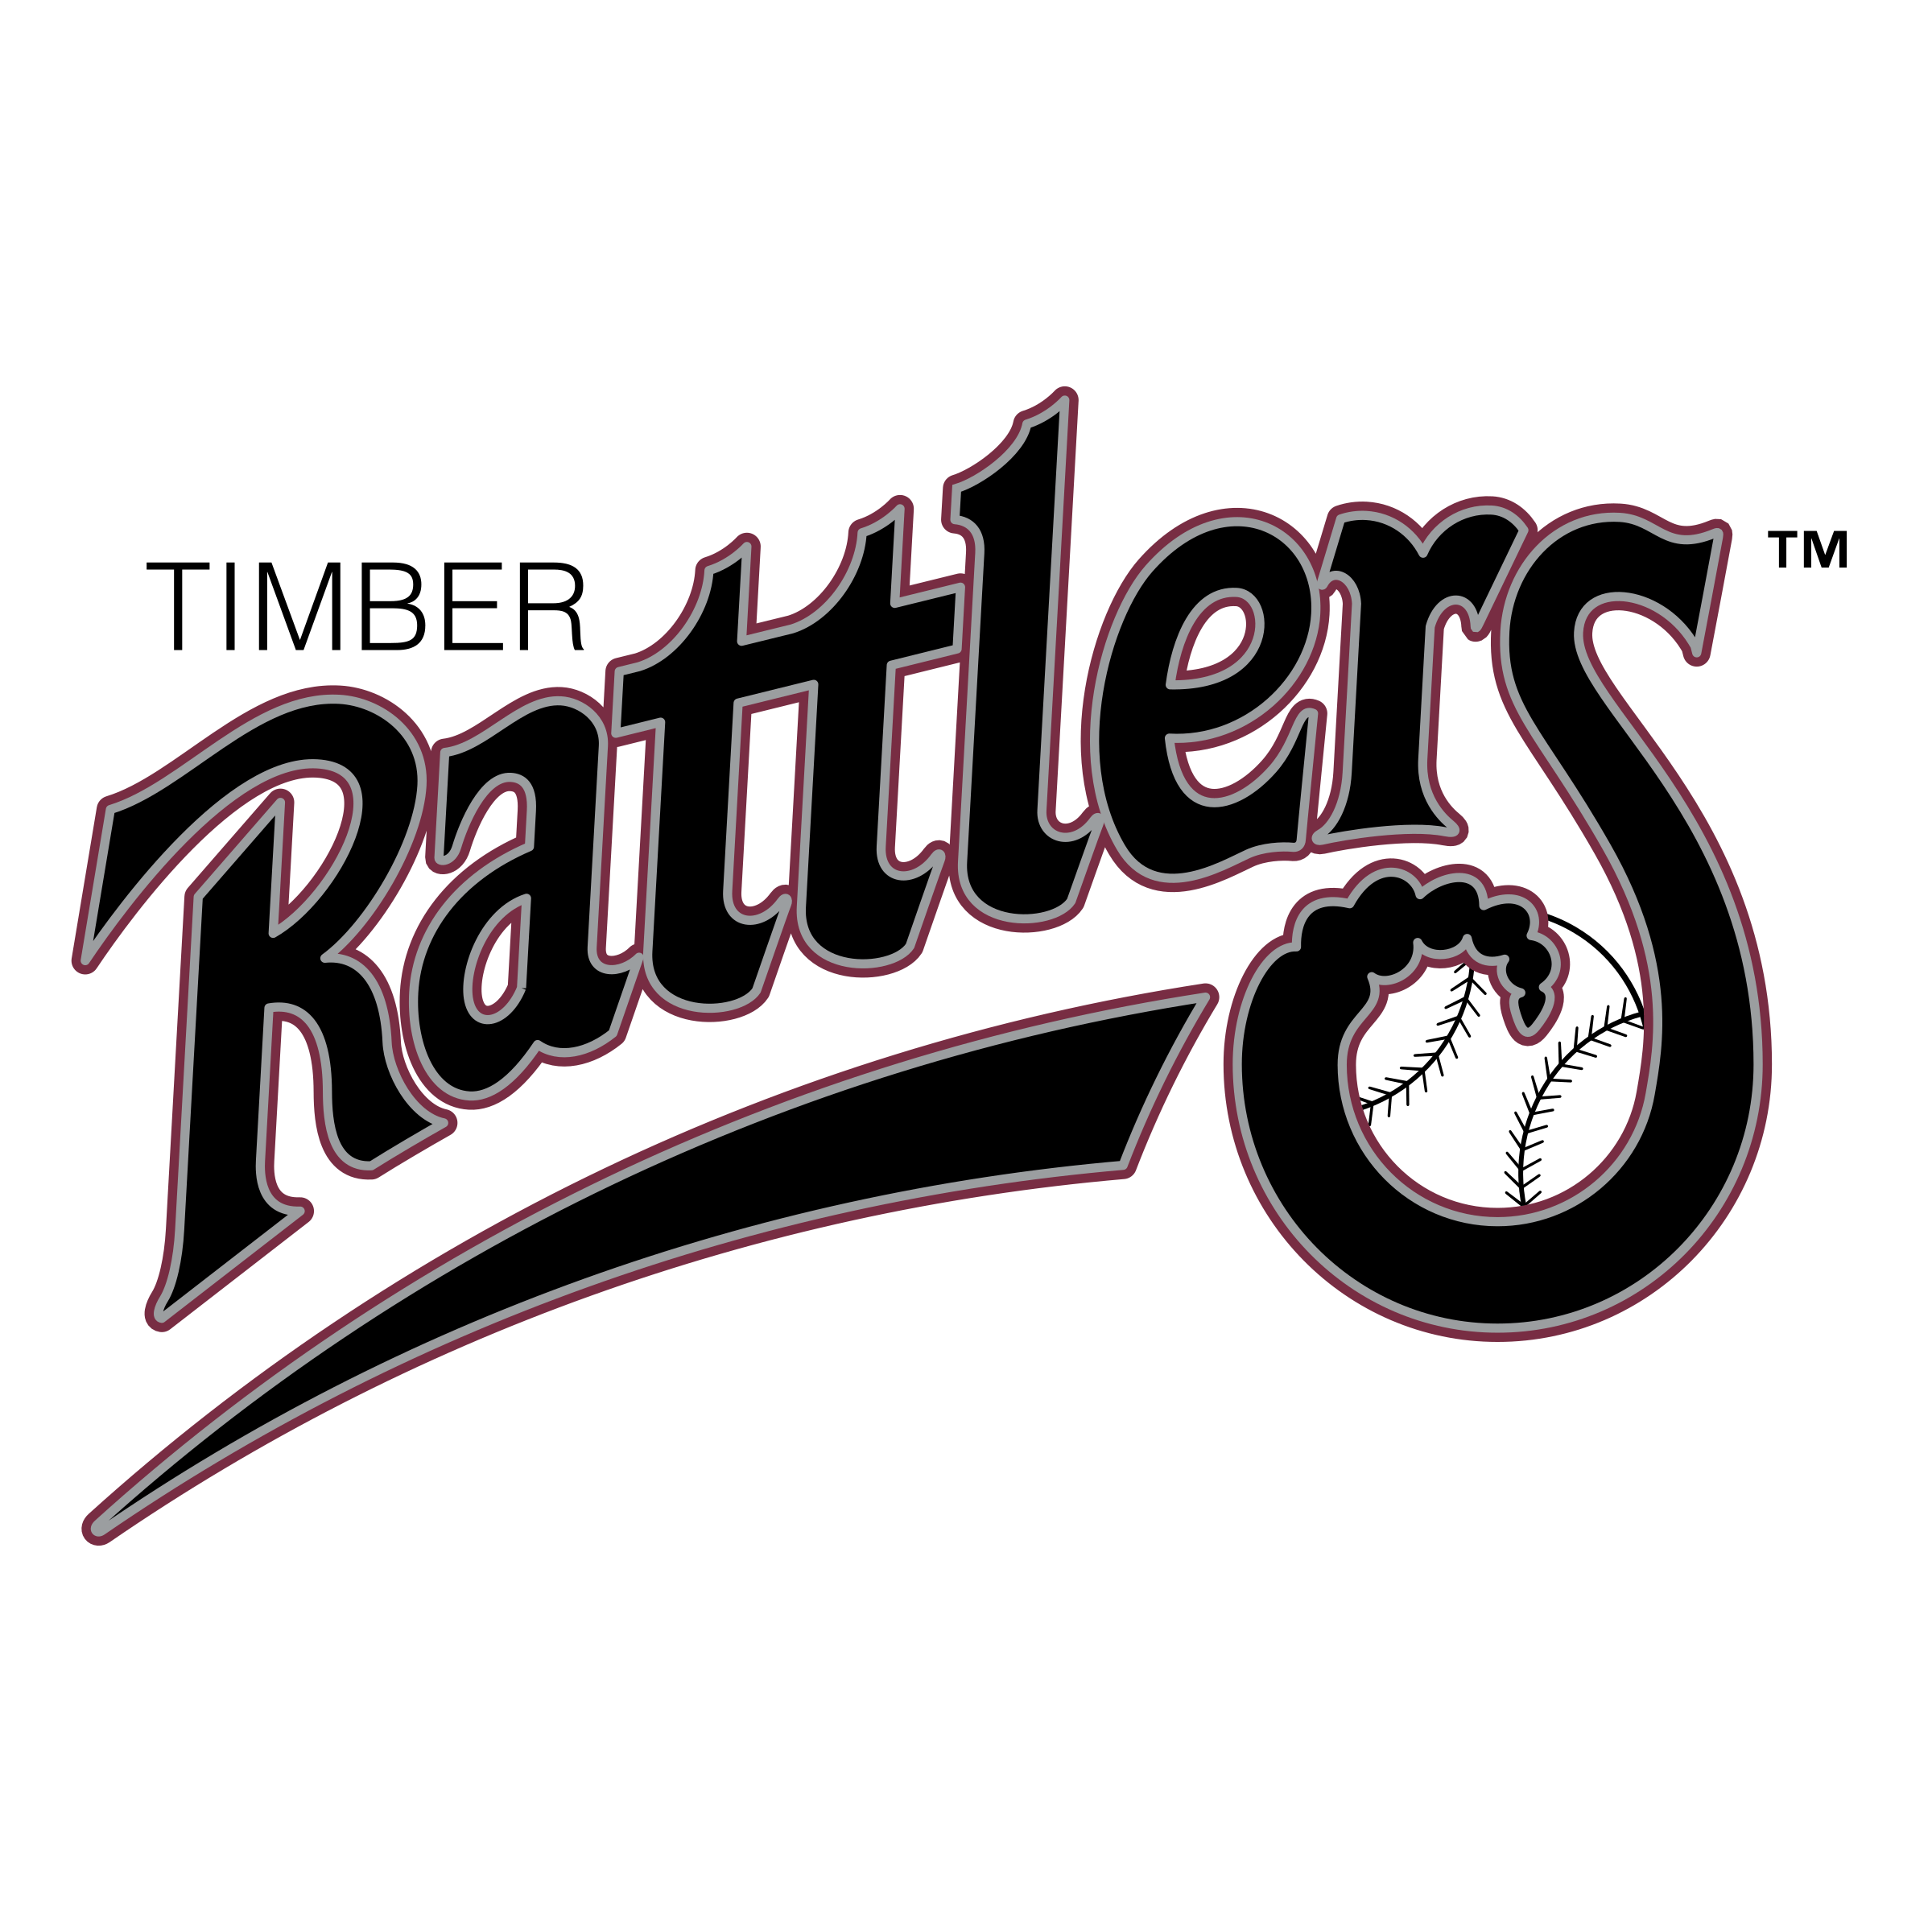 Rattlers Logo - Wisconsin Timber Rattlers Logo PNG Transparent & SVG Vector ...